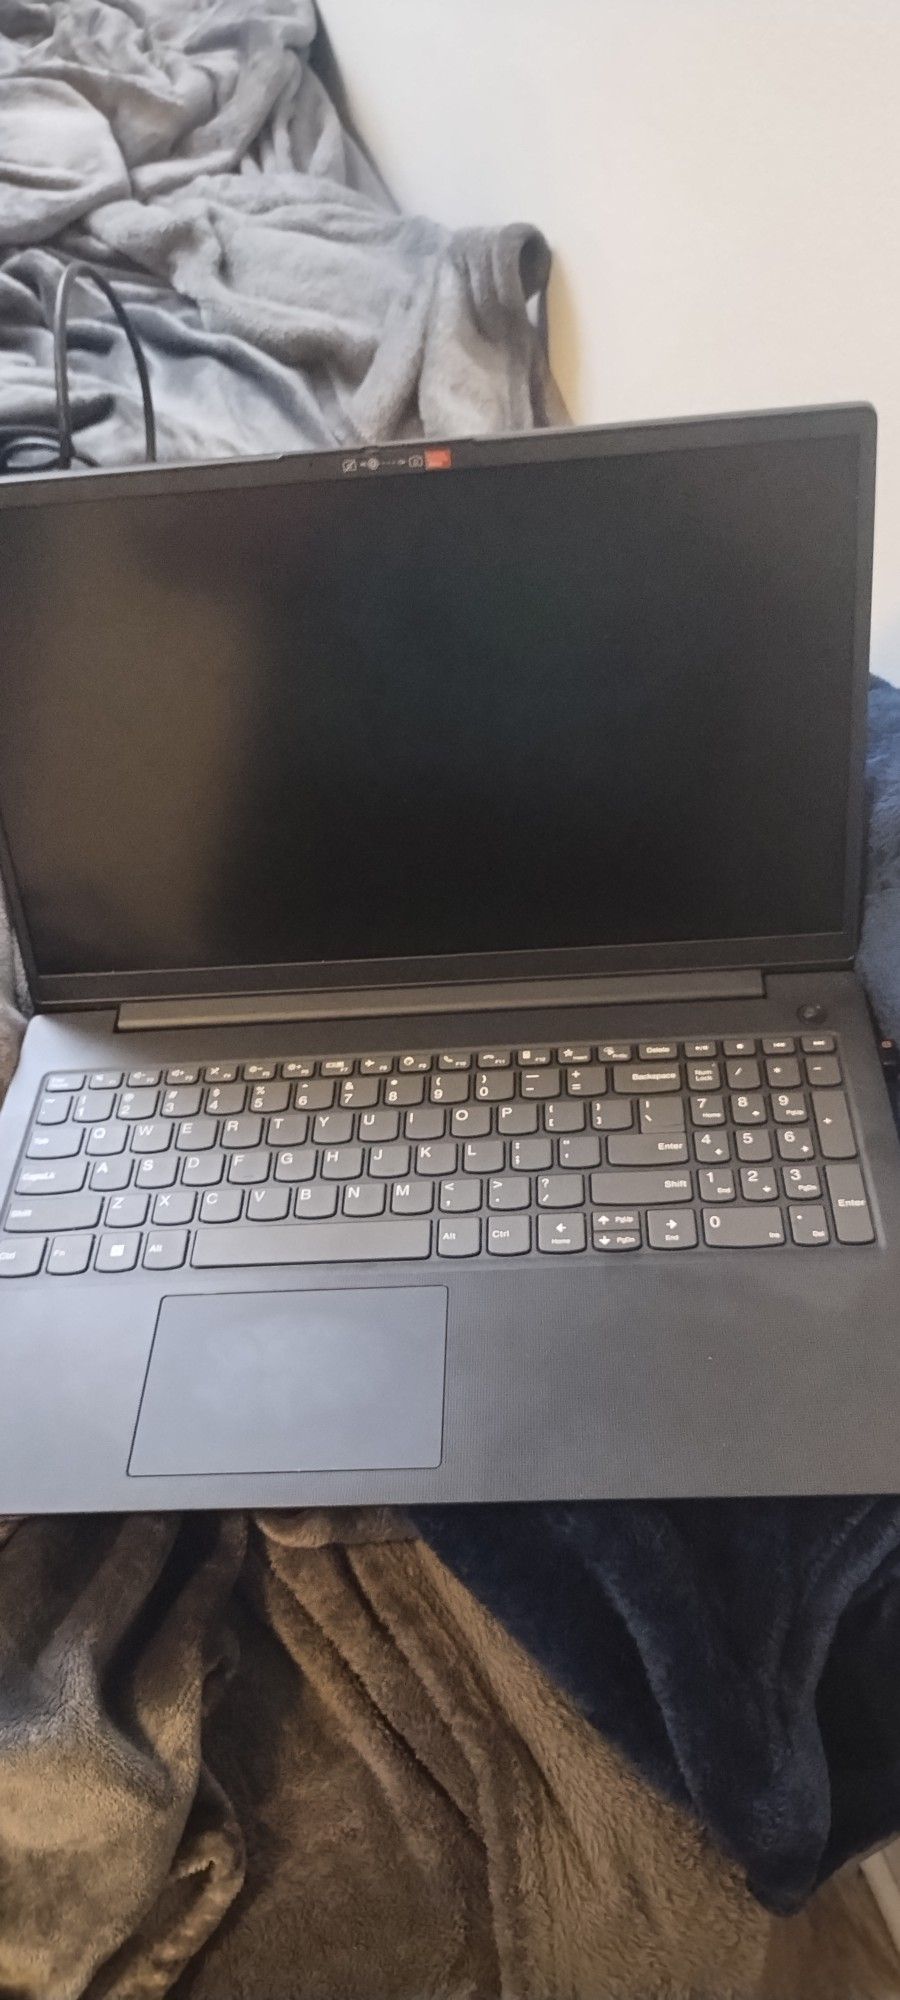 Lenovo Laptop $300